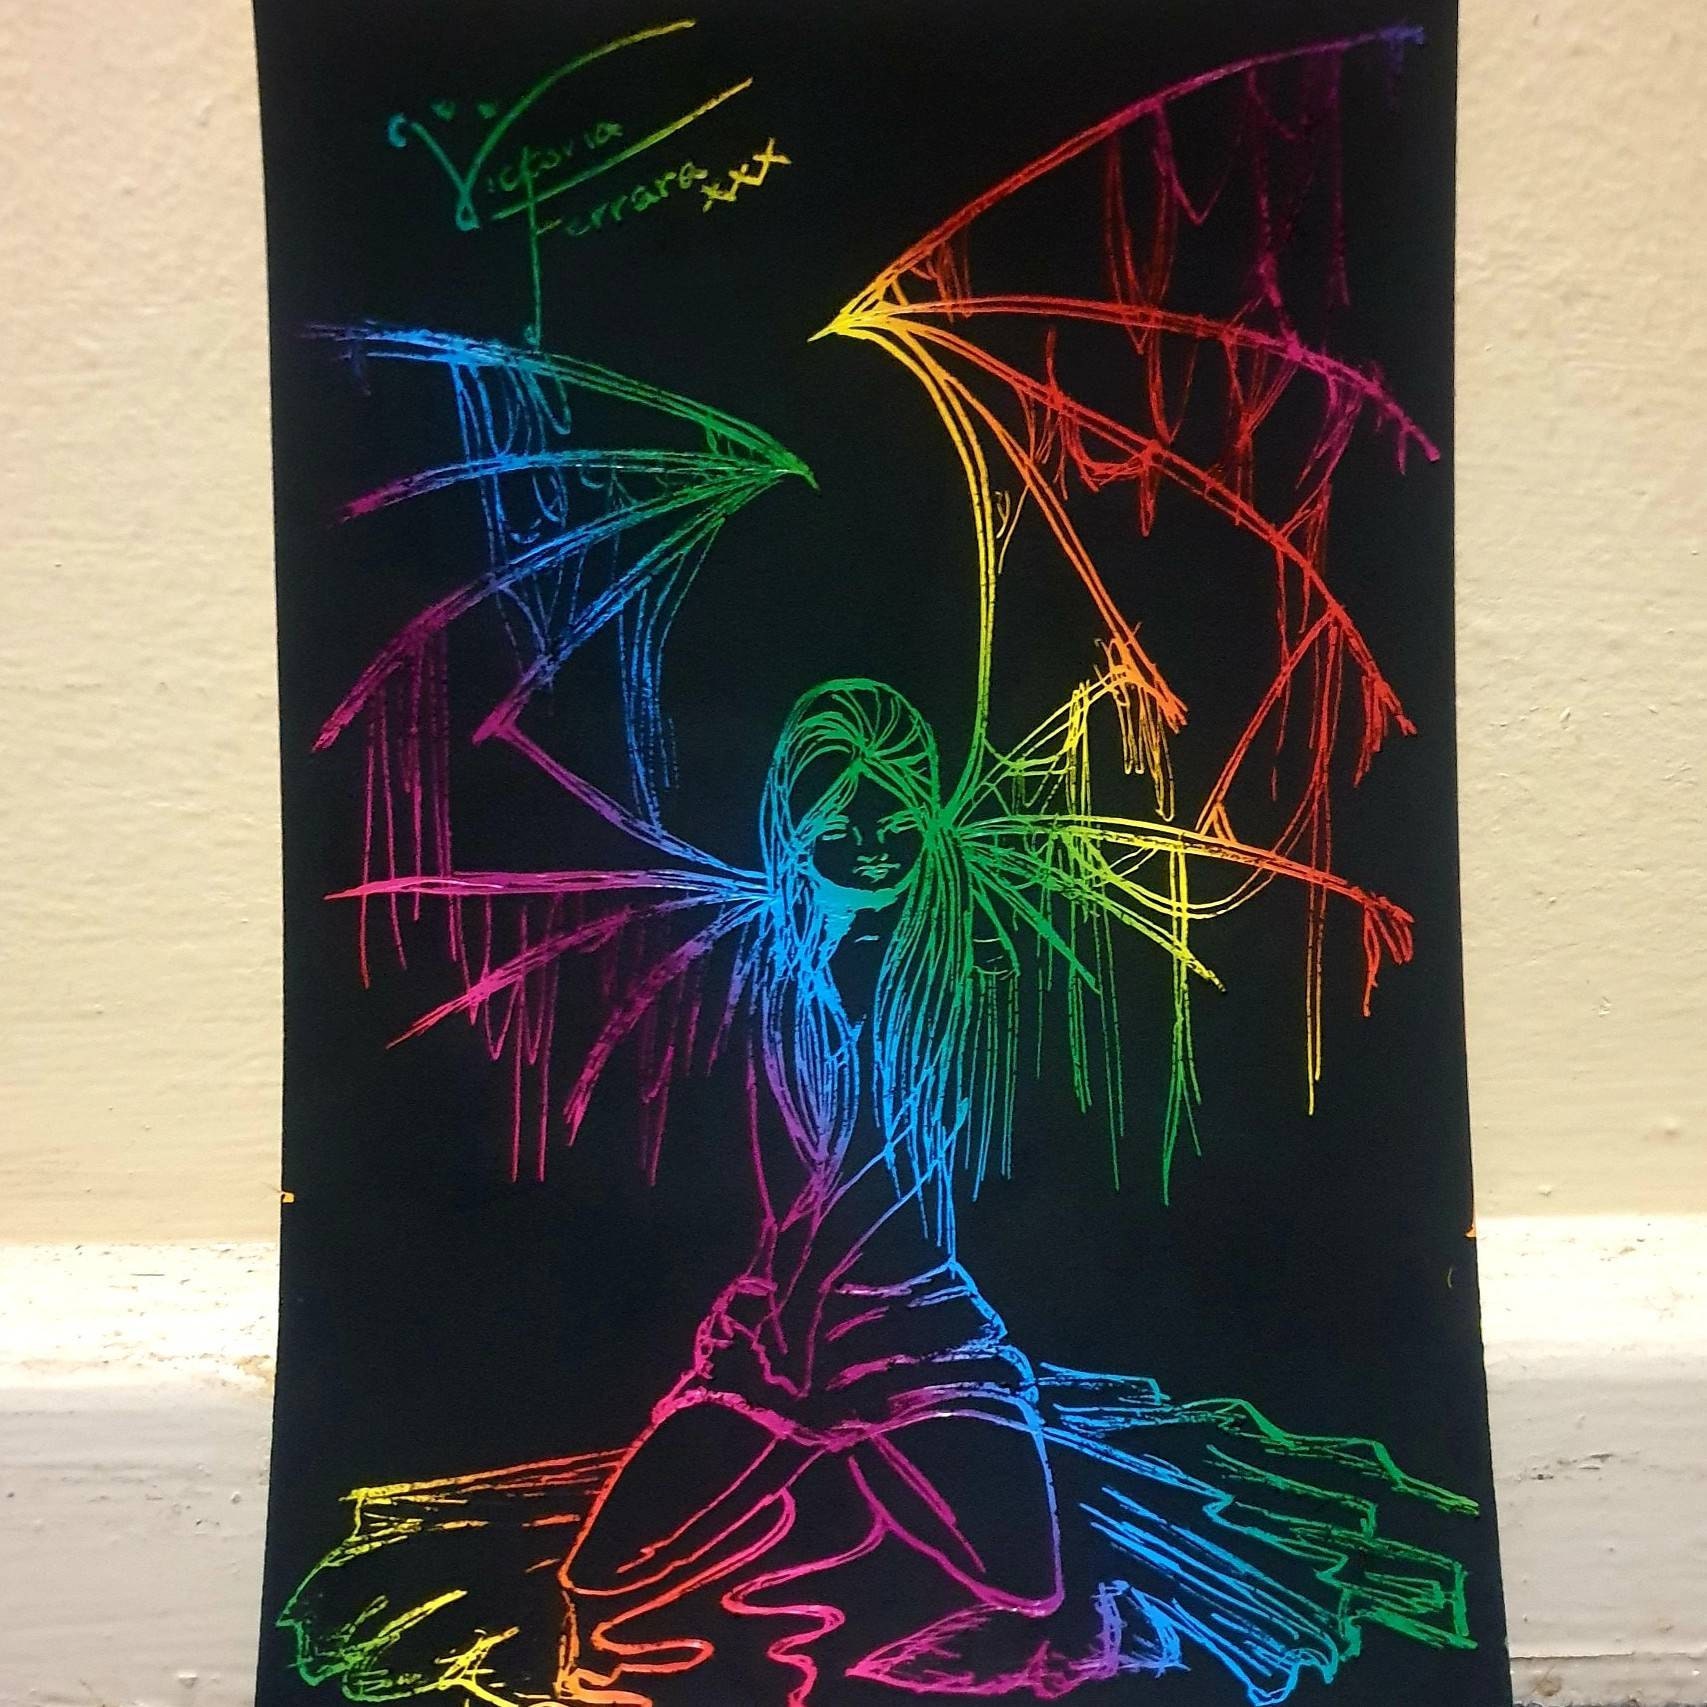 Magic Rainbow Scratch Art Paper With Stencil 